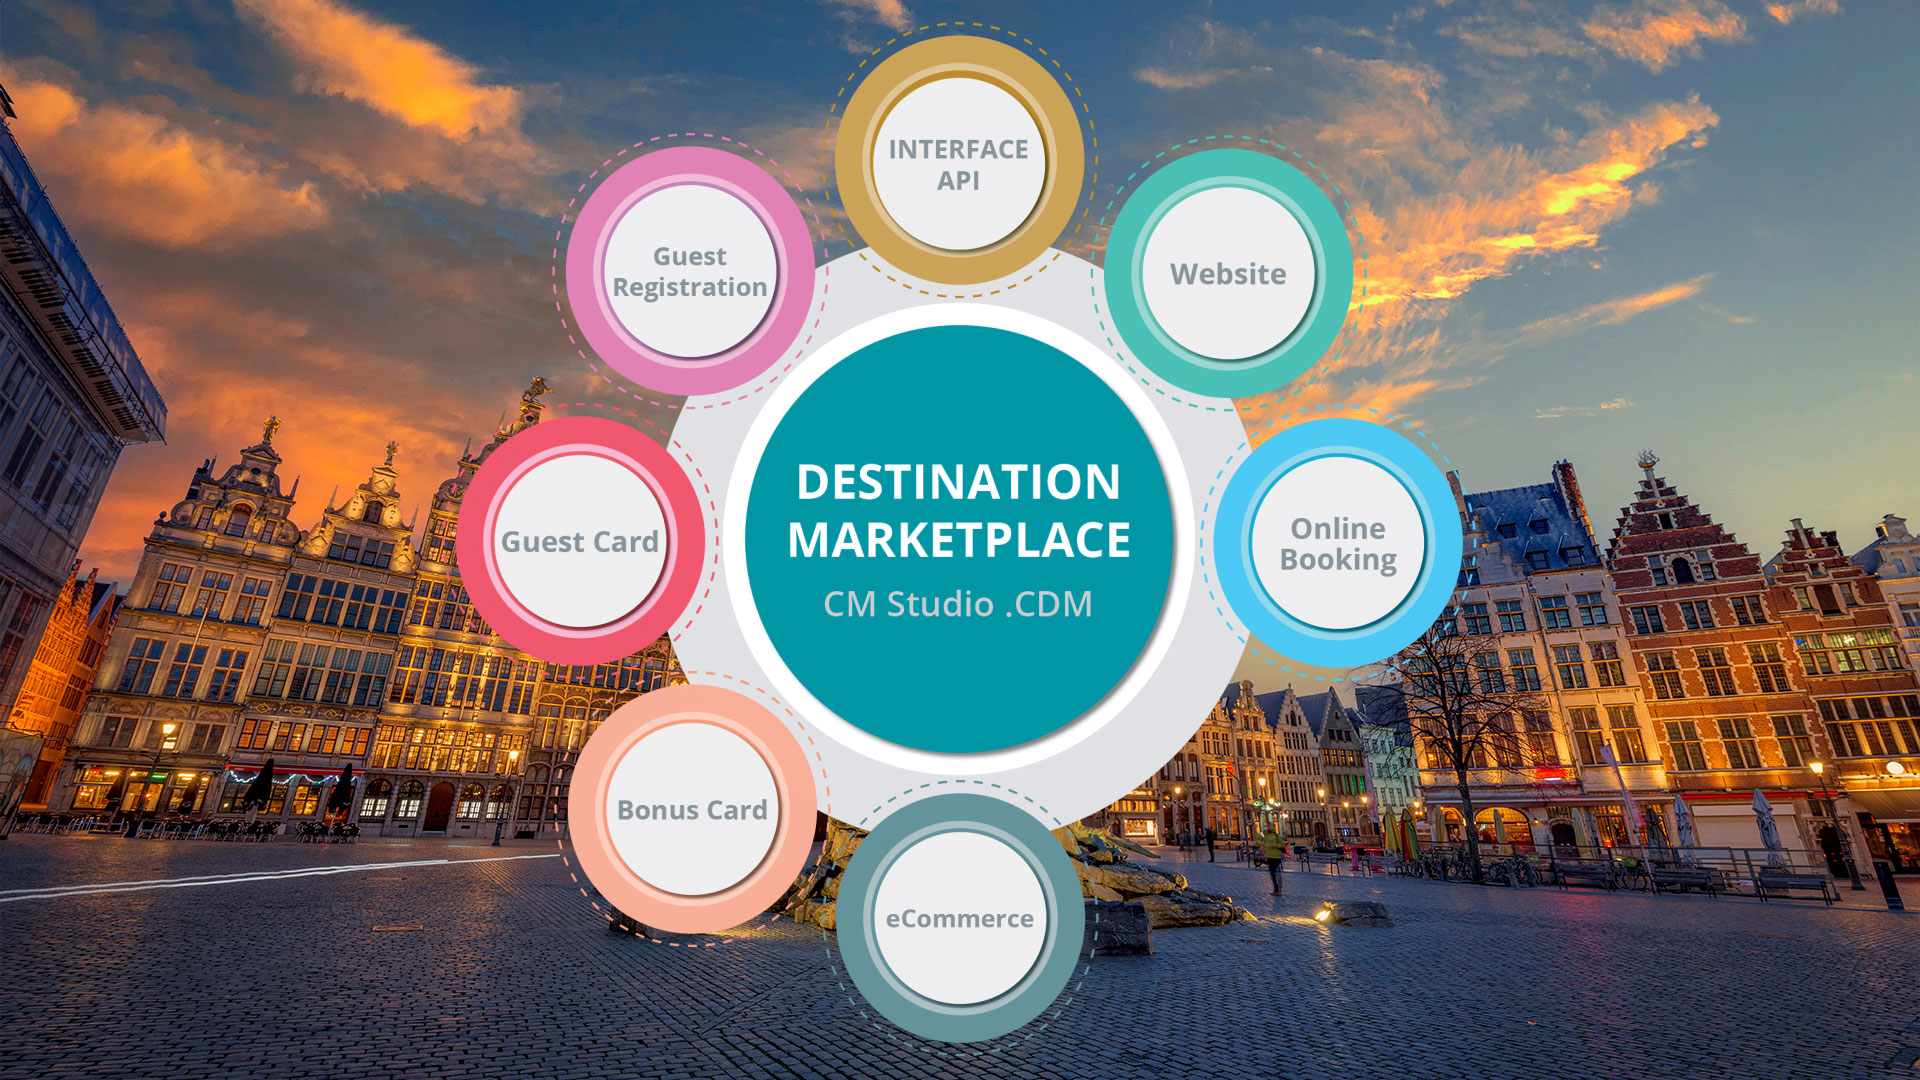 CM Studio .CDM - The Digital Destination Marketplace...